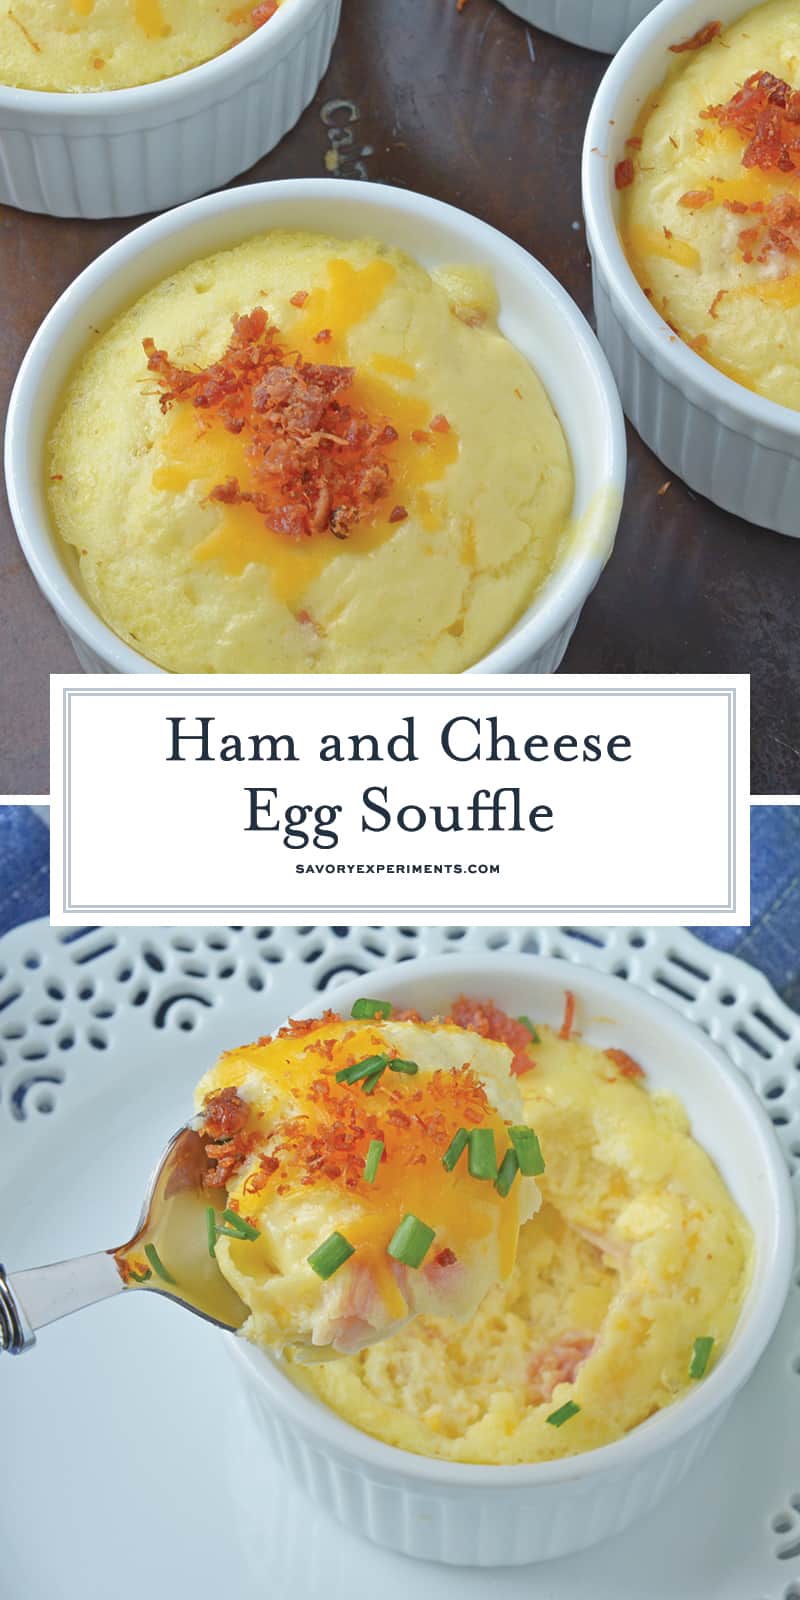 Ham and Cheese Egg Soufflé - A Delicious Soufflé Recipe